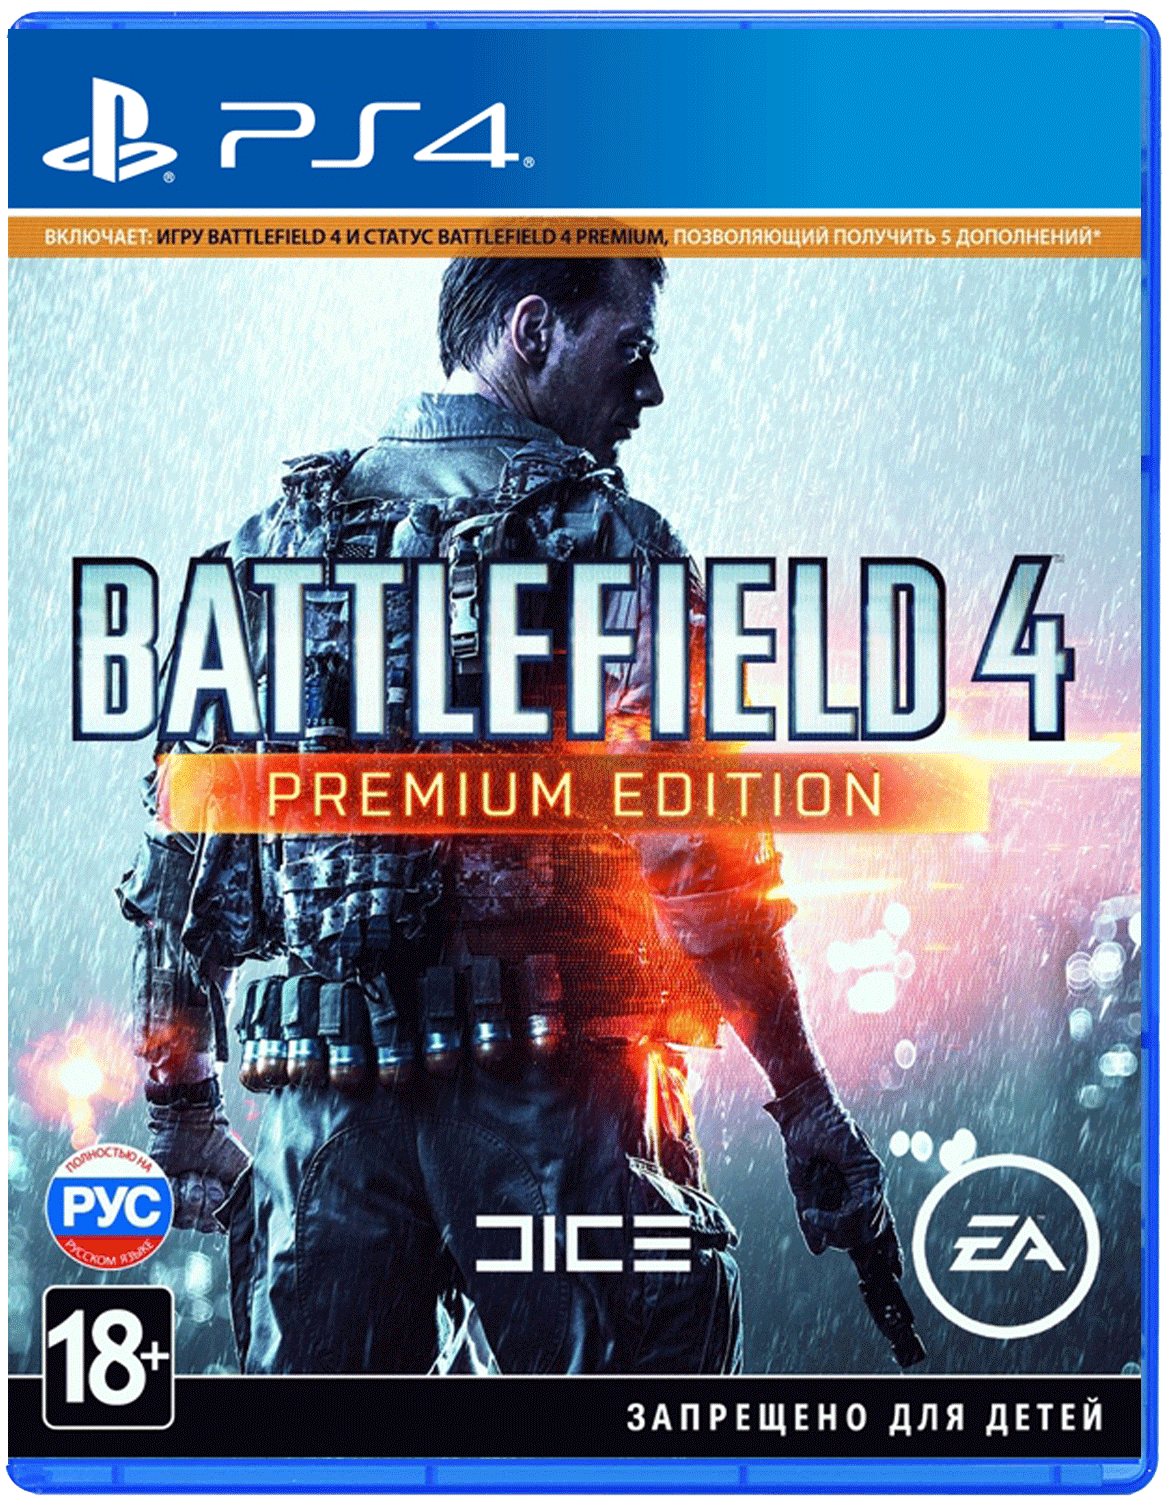 Xbox one игры 4. Battlefield 4 Premium Edition ps4. Battlefield 4 ps4 диск. Диск для ps4 Battlefield 4 Premium Edition. Battlefield ps4 игры на ps4.